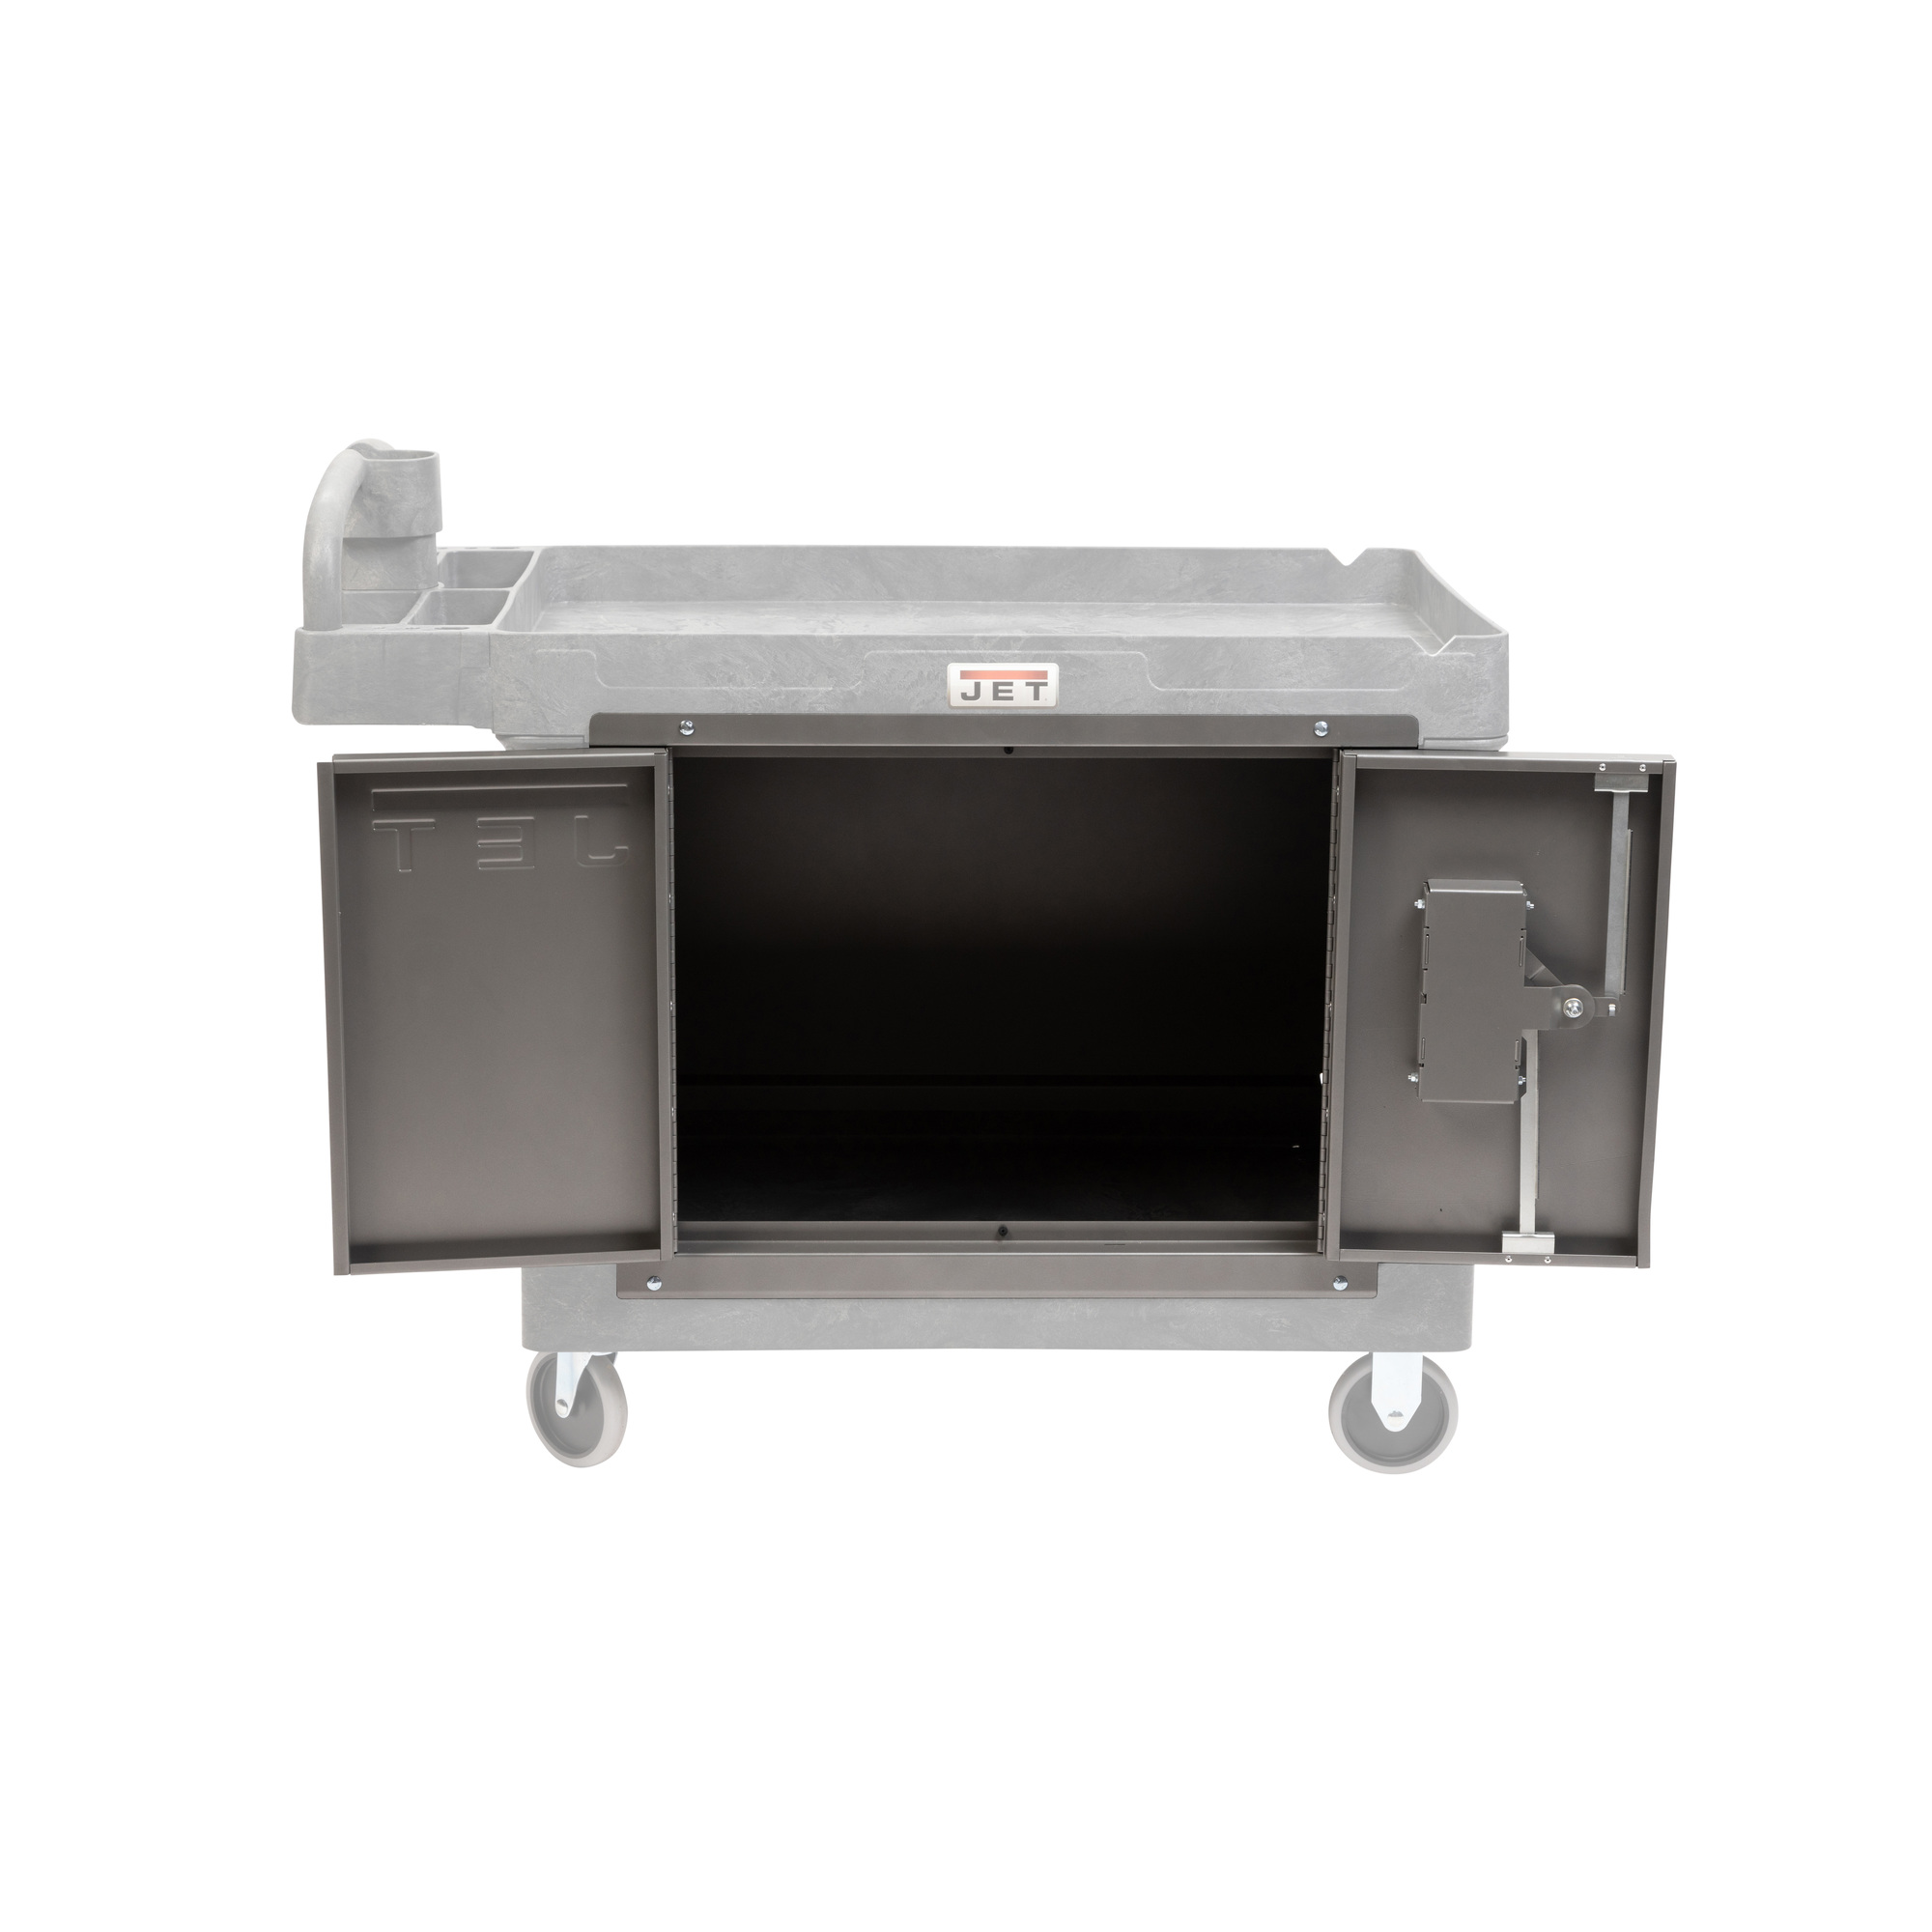 JET, LOAD-N-LOCK Cart Security System (141016), Total Capacity 0 lb, Shelves (qty.) 0 Material Steel, Model JT1-125